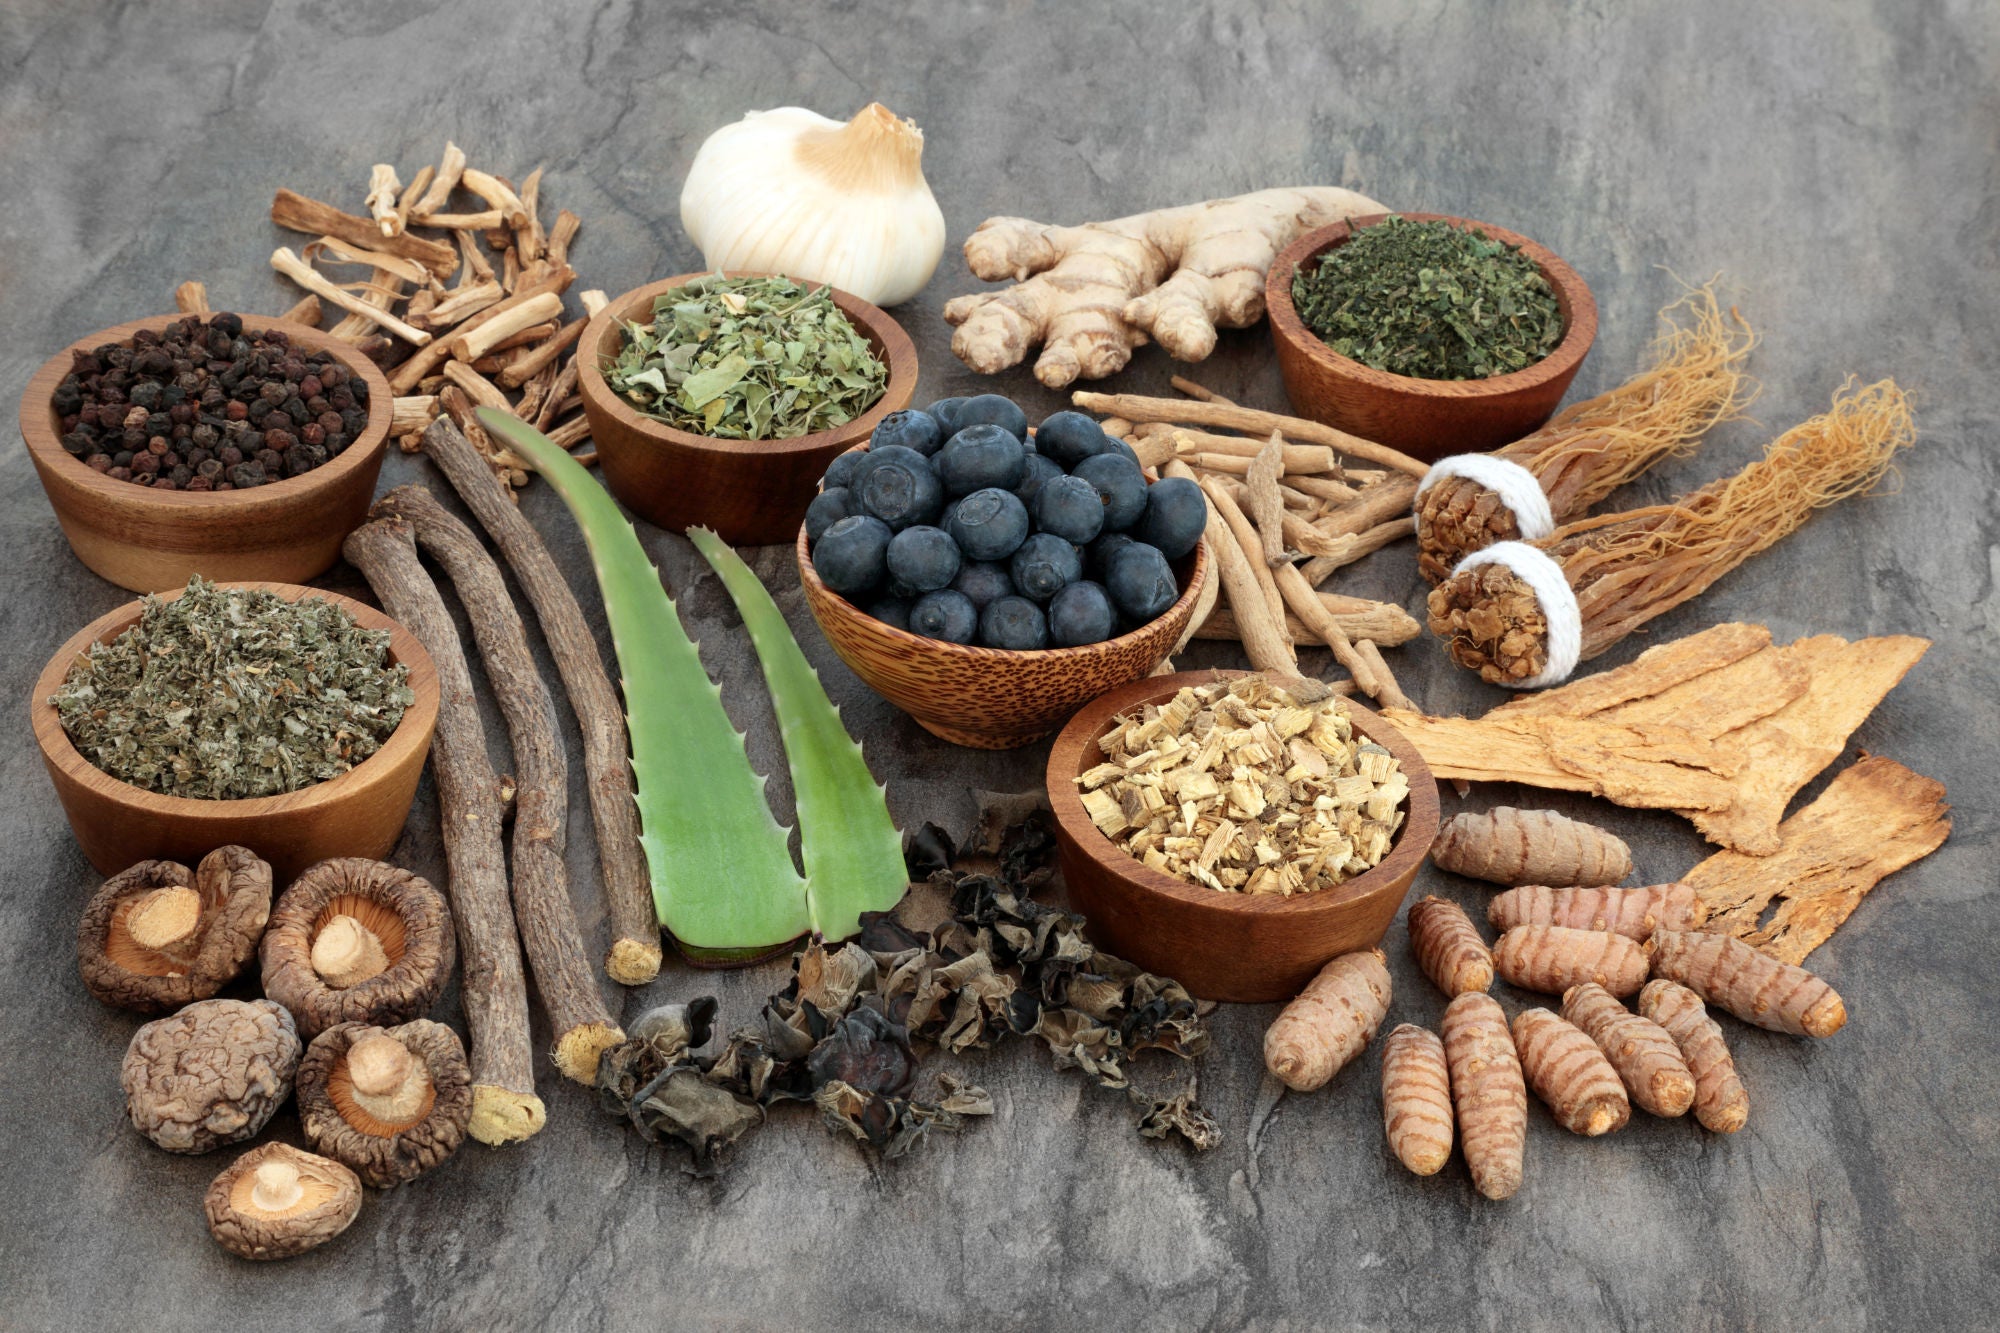 Adaptogenic Ingredients including Ginseng, Juniper, Shitake Mushrooms, Turmeric, Maca Root